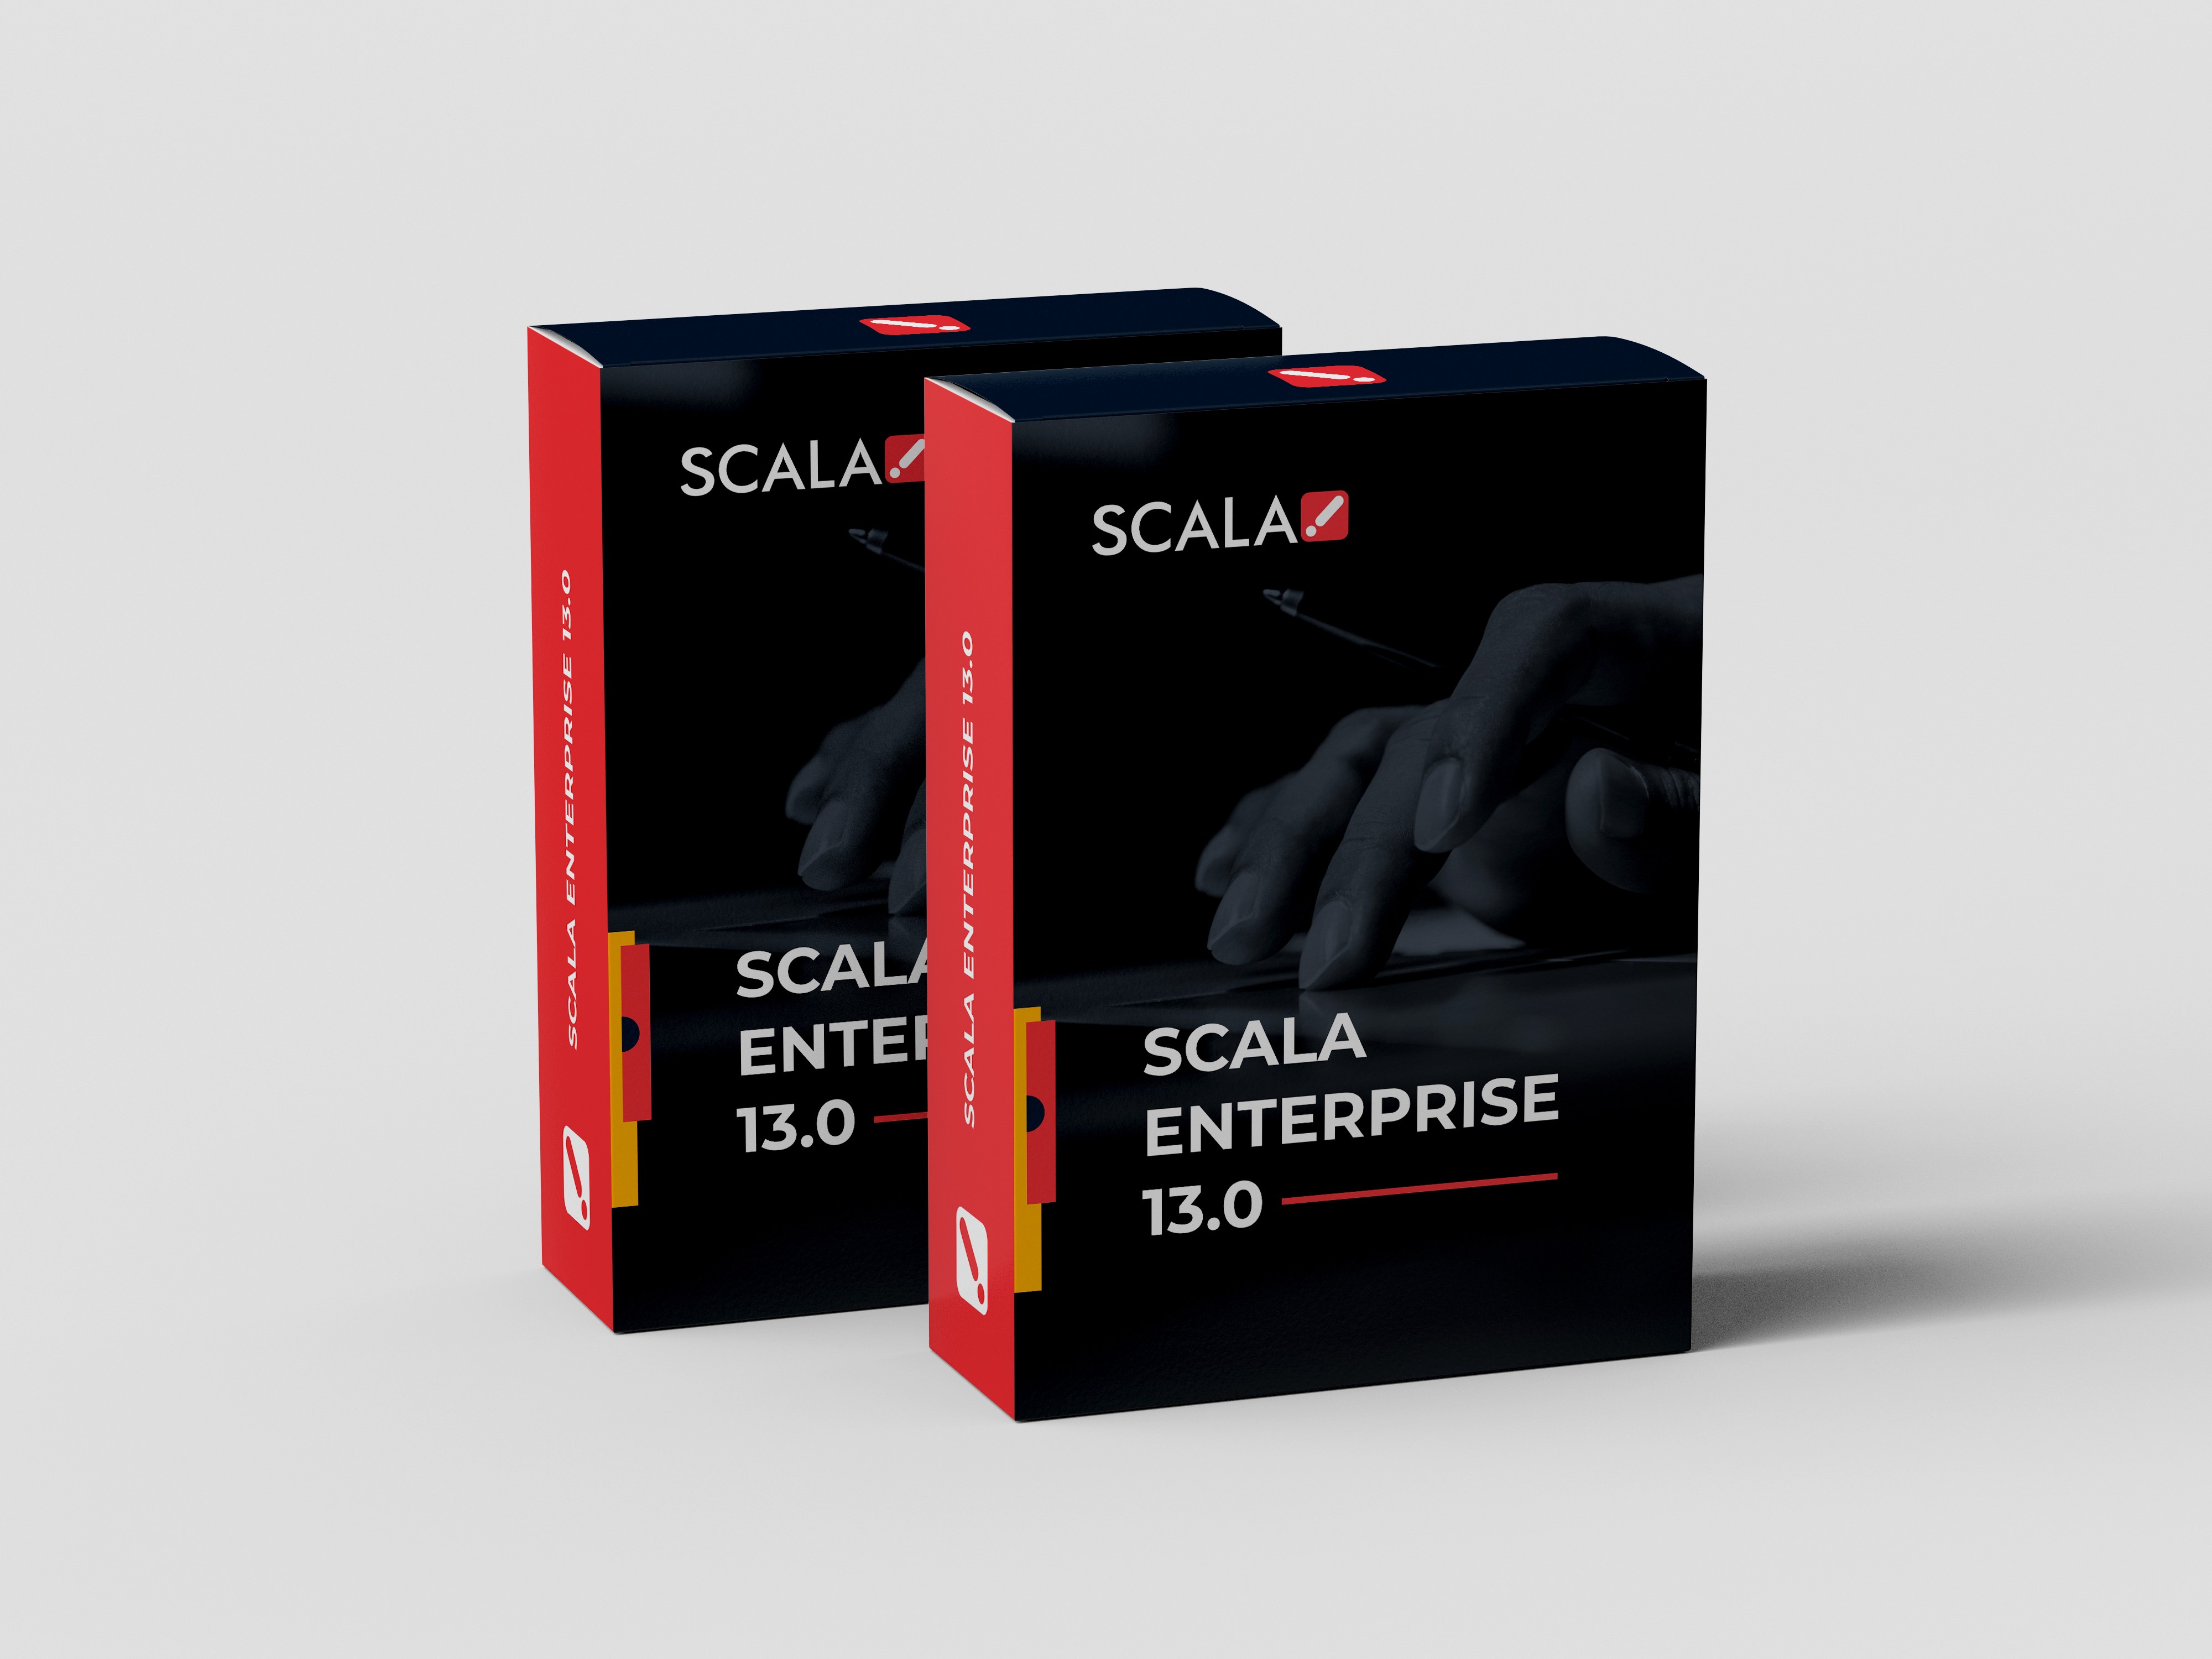 Scala Announces a Major Release of Flagship Digital Signage Platform  Scala Enterprise 13.00